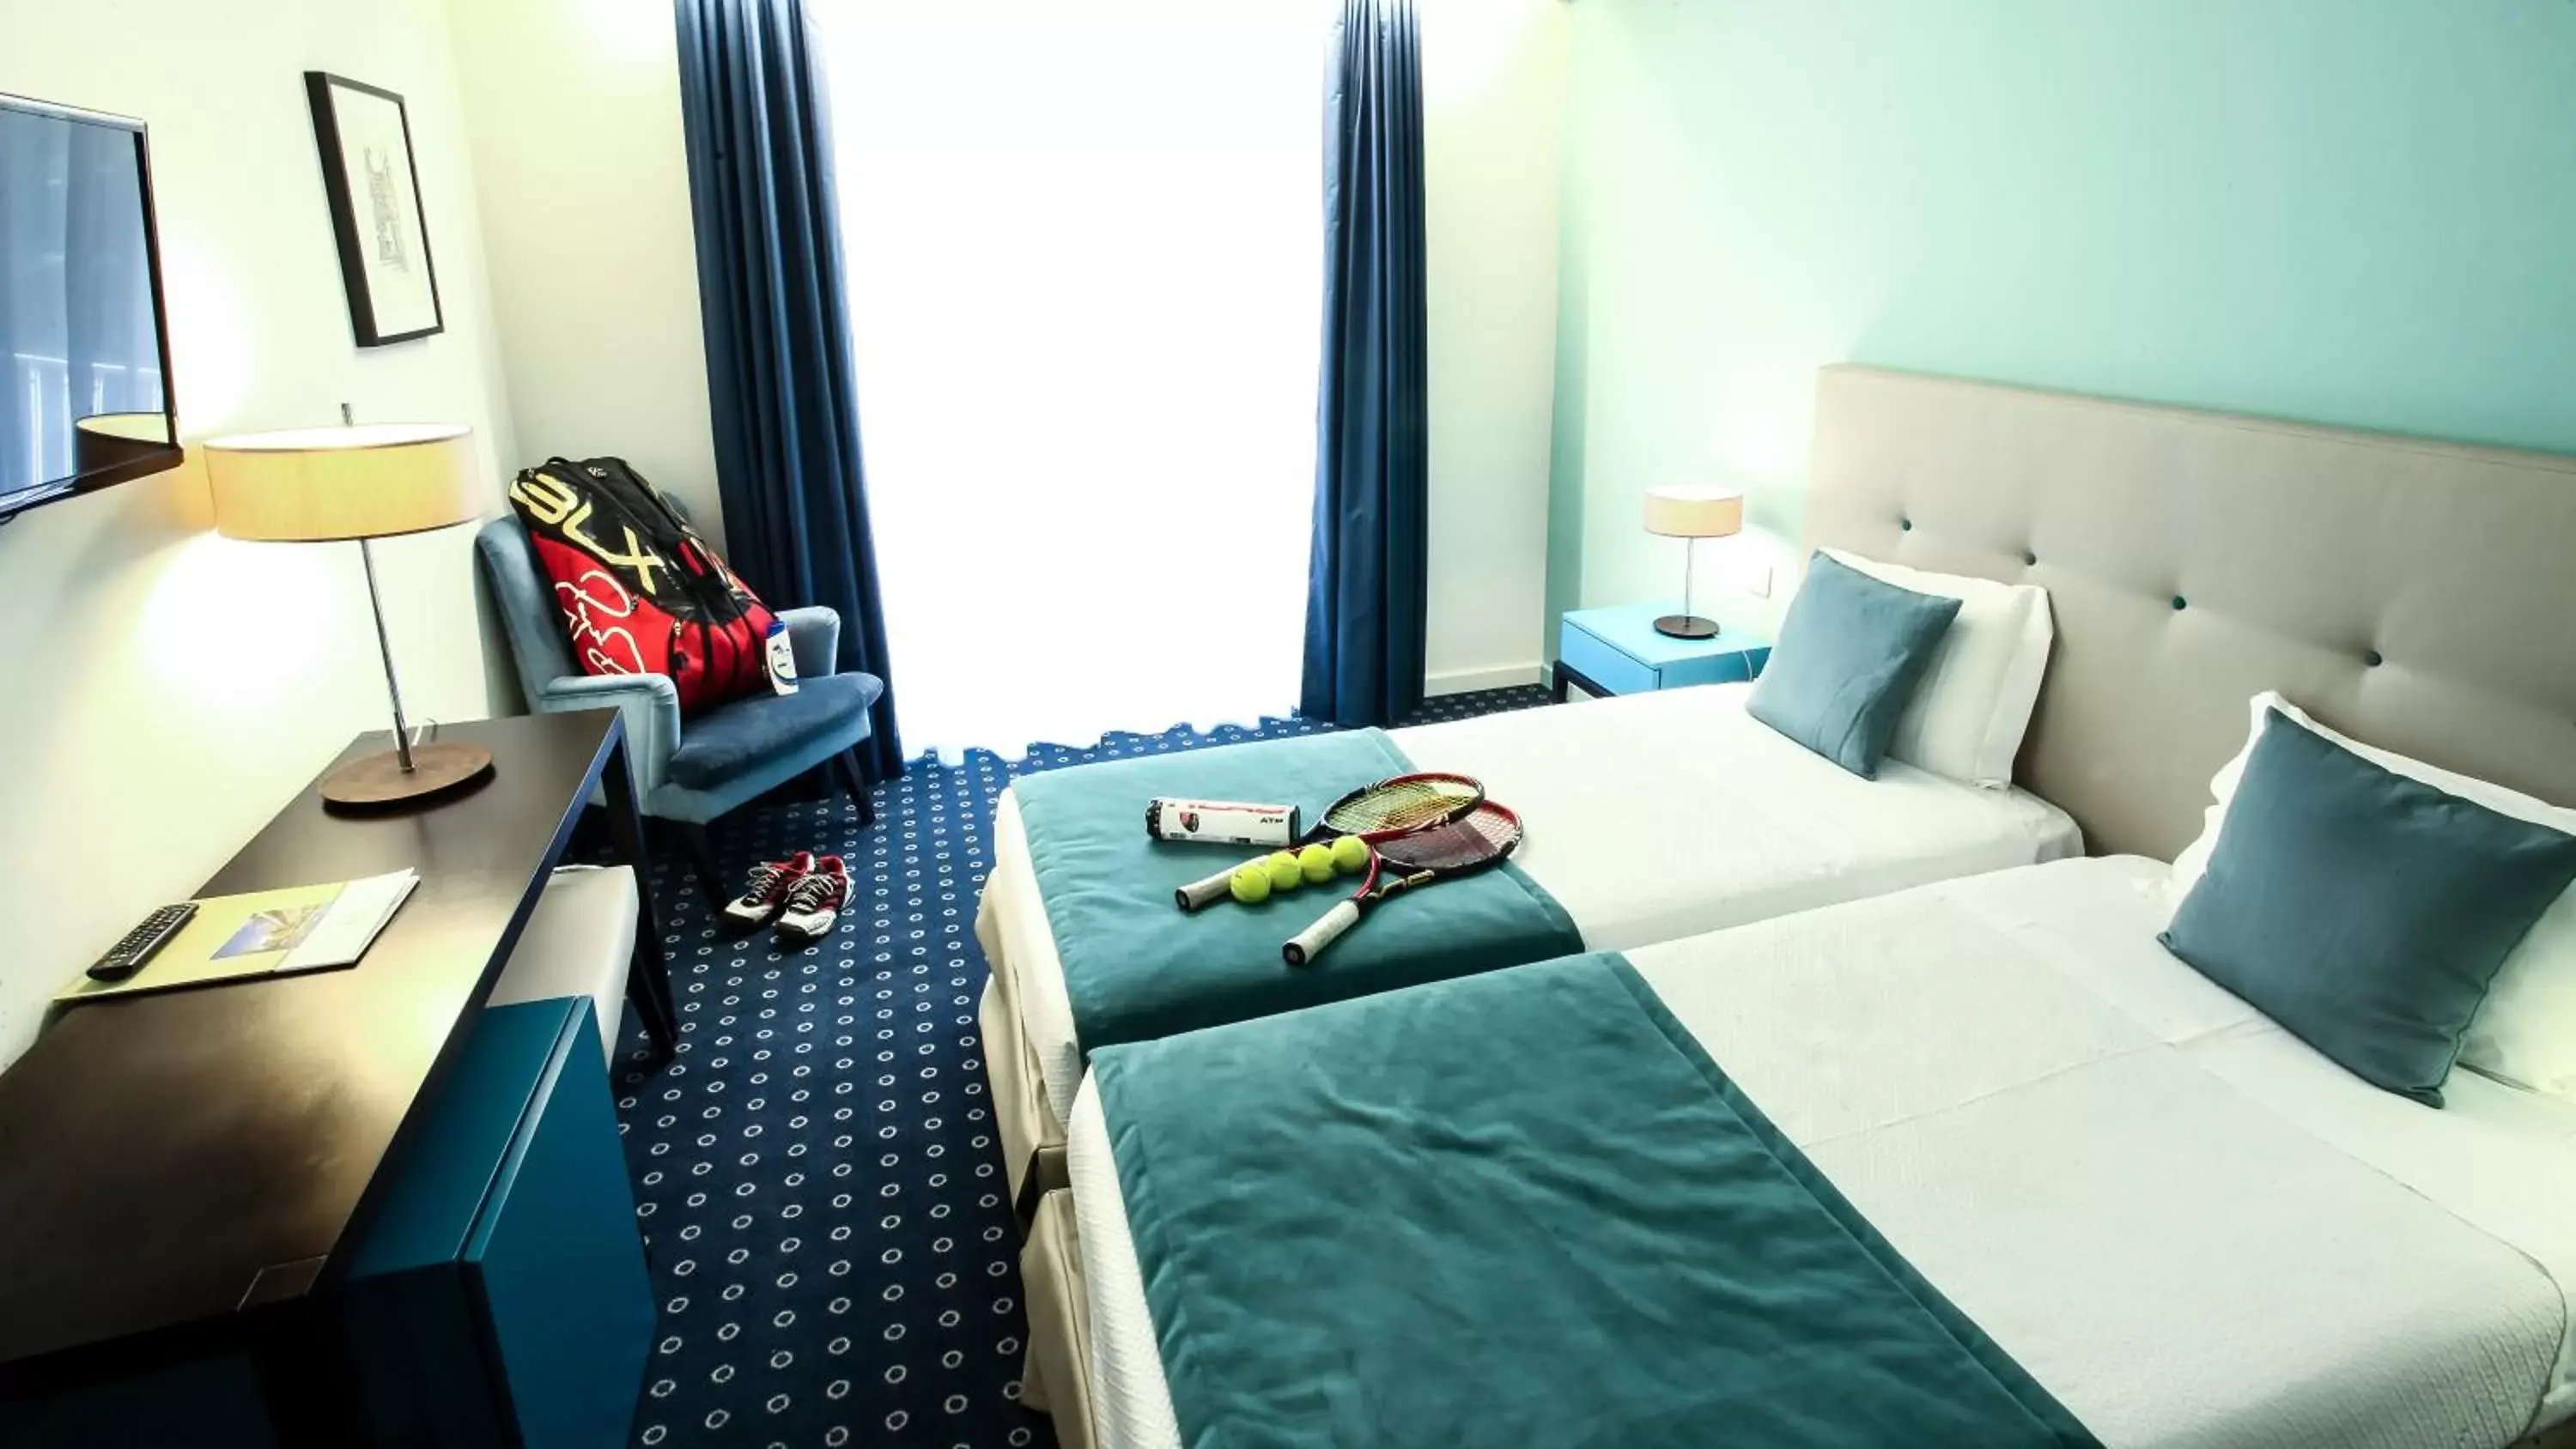 Bed, Room Photo in Hotel Grao Vasco